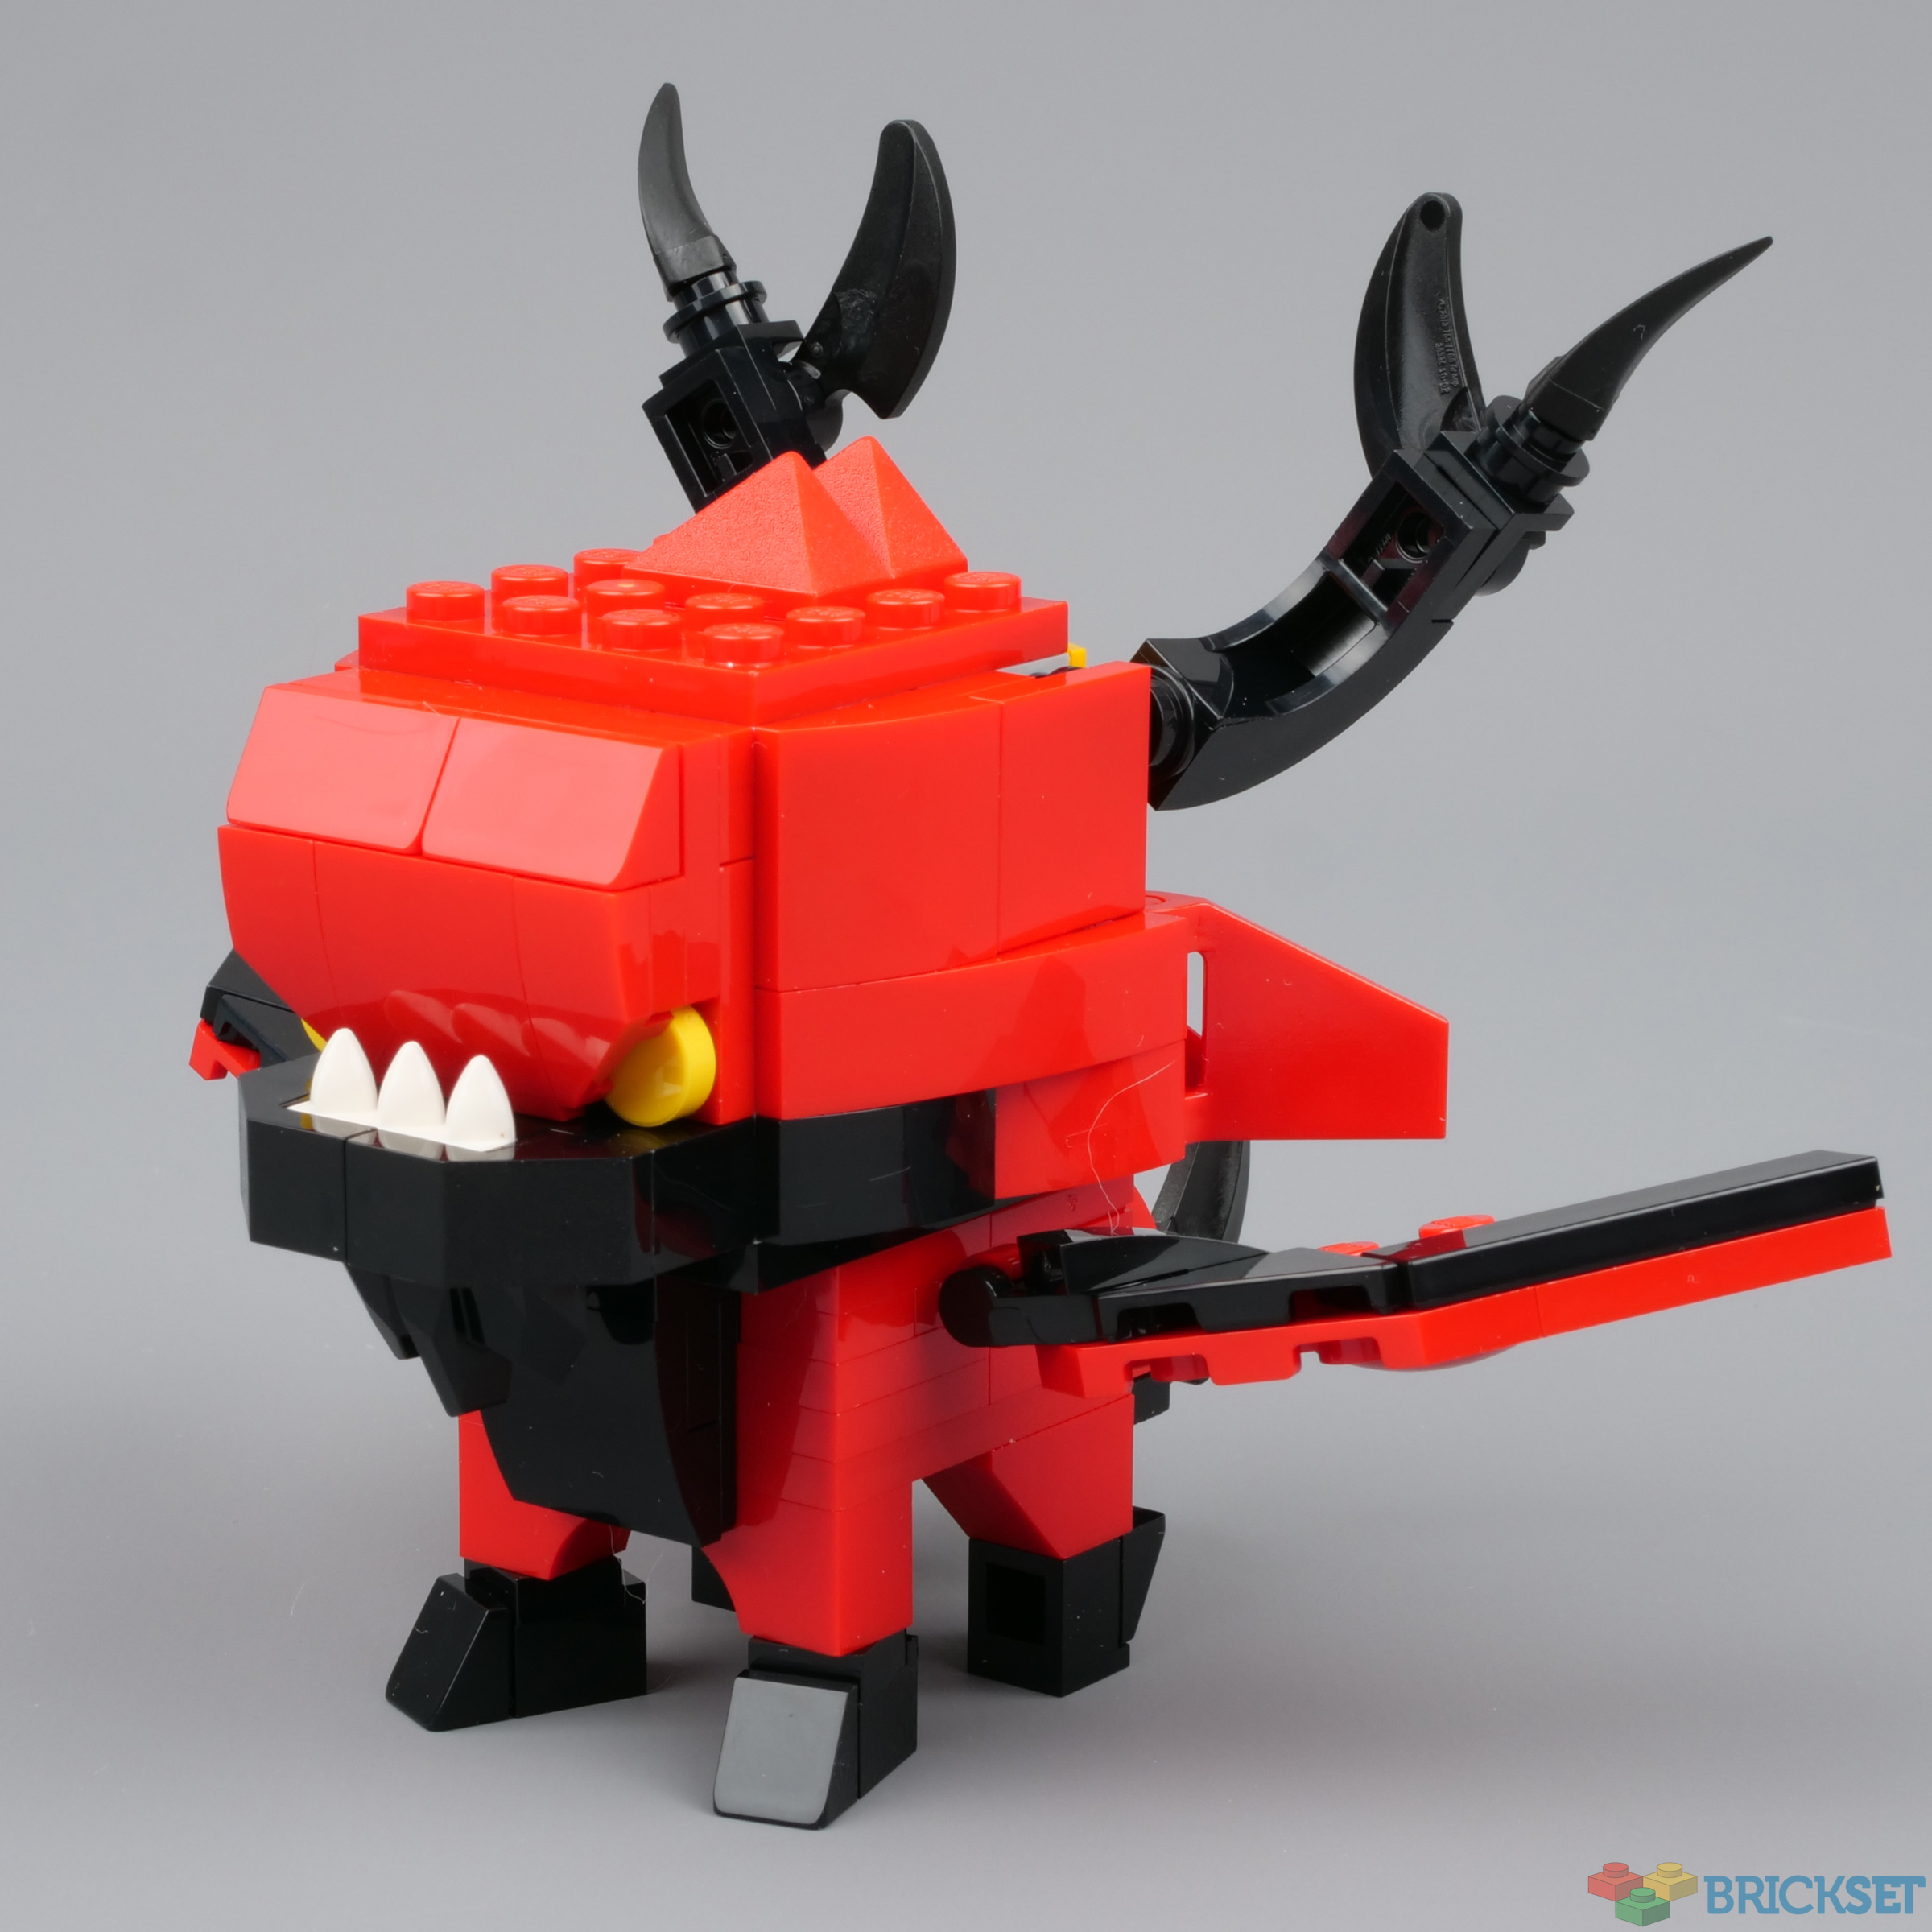 LEGO 40490 - Brickheadz Ninjago - Exclusif 10 ans - Lloyd en Or - 3  personnages